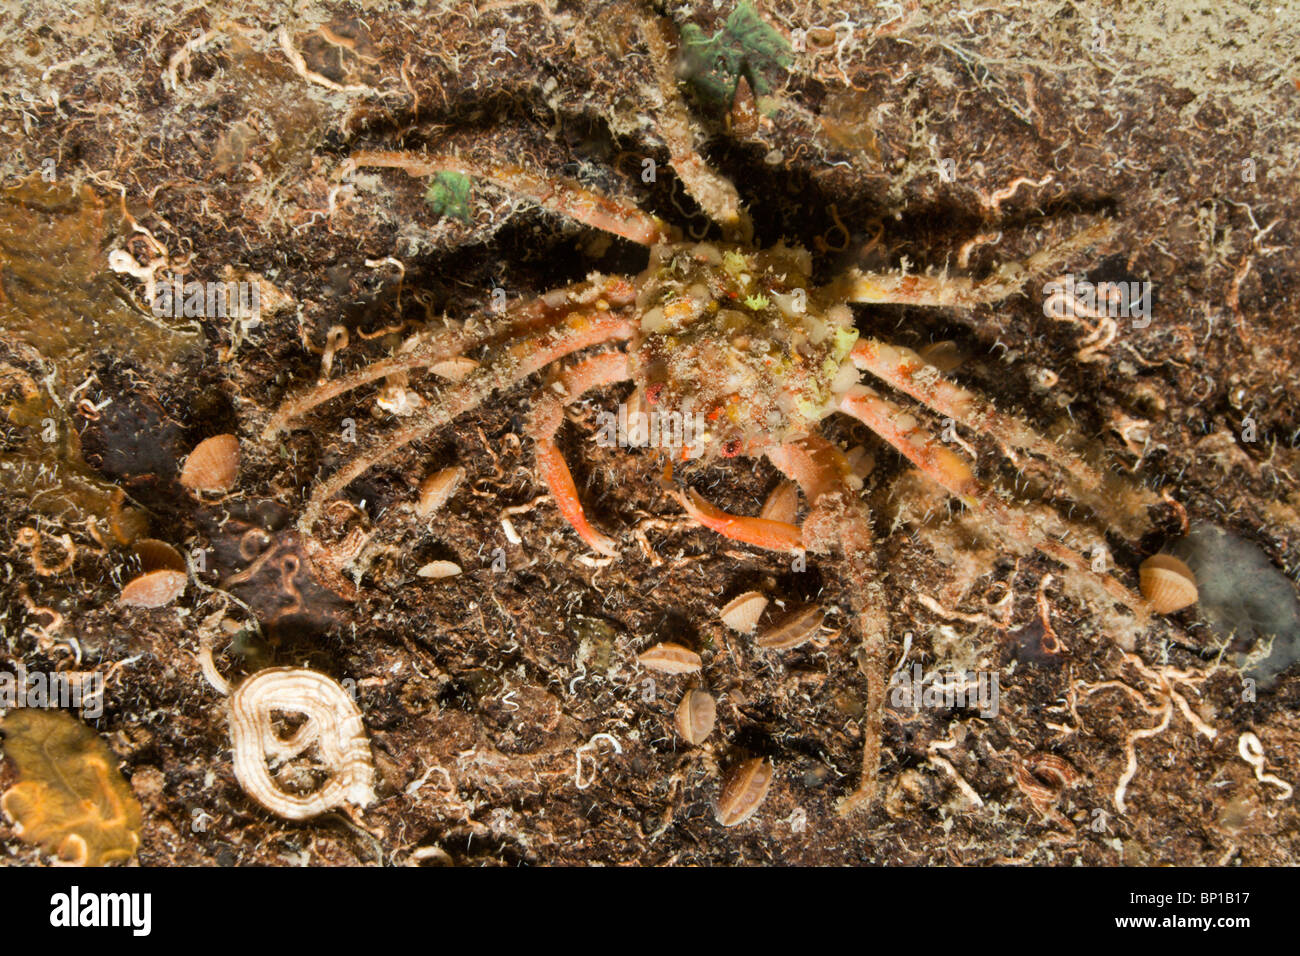 Majoid Crab well camouflaged, Herbstia condyliata, Cap de Creus, Costa Brava, Spain Stock Photo